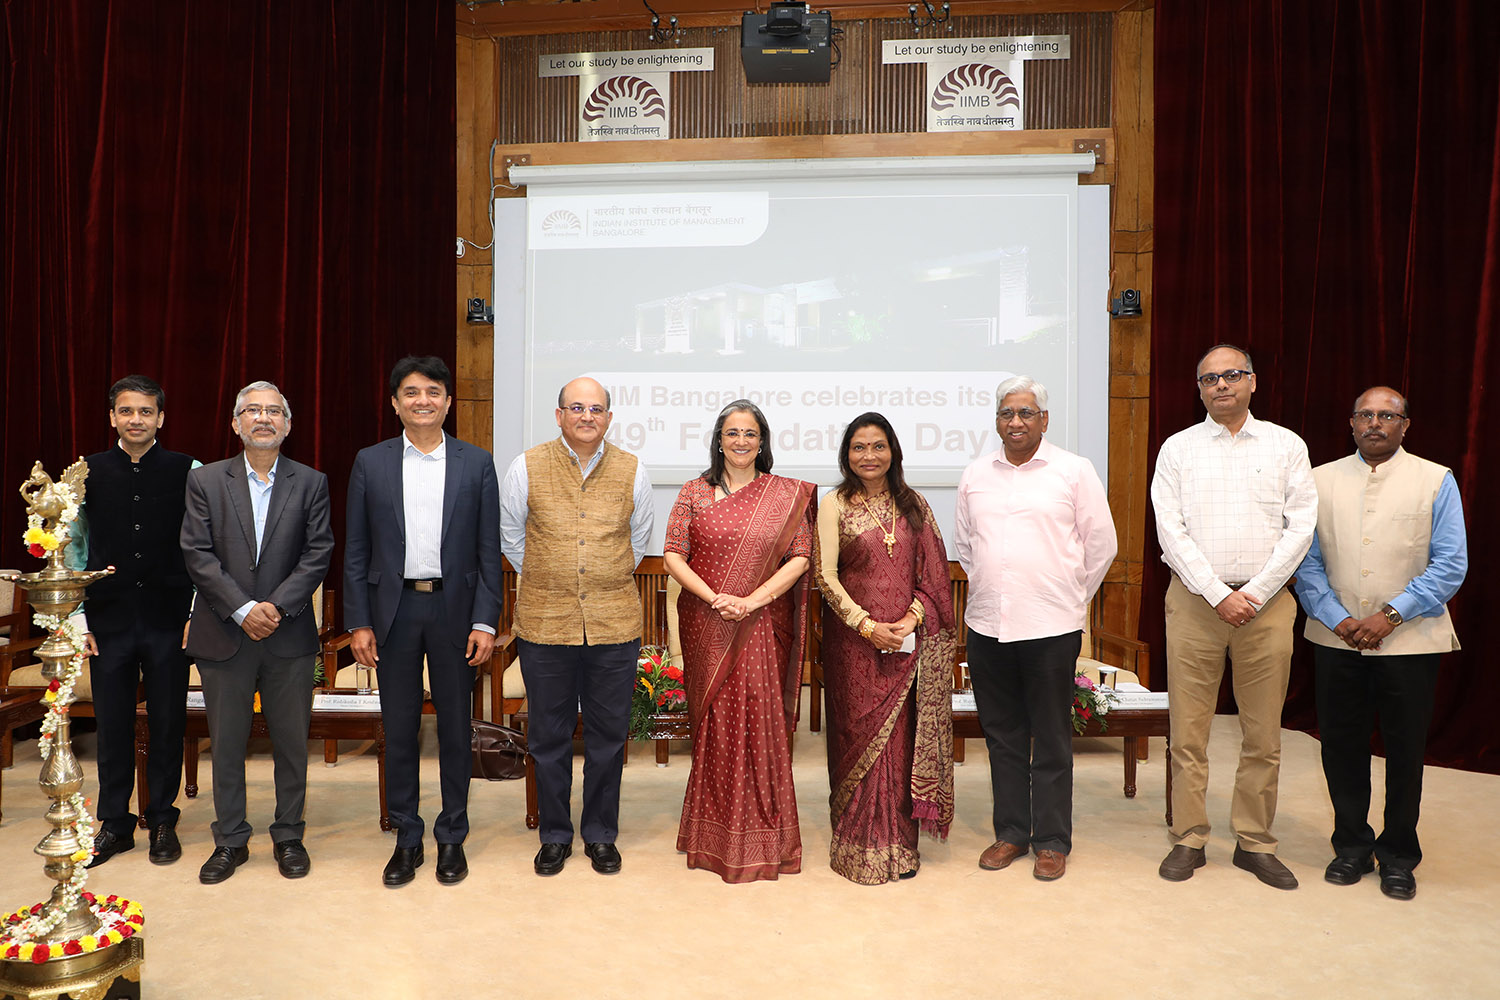 (L-R) Prof. Sourav Mukherji, Dean, Alumni Relations & Development, IIMB; Prof. Rahul Dé, Dean, Programmes, IIMB; Mr M. D. Ranganath, Member of the Board of Governors, IIMB; Prof. Rishikesha T Krishnan, Director, IIMB; Ms Madhabi Puri-Buch, Chairperson, Securities and Exchange Board of India (SEBI); Ms. Kalpana Saroj, Member of the Board of Governors, IIMB; Prof. Rajendra K Bandi, Dean, Administration, IIMB; Prof. Chetan Subramanian, Dean, Faculty, IIMB; Col. (Retd.) S.D. Aravendan, Chief Administrative Officer, IIMB.